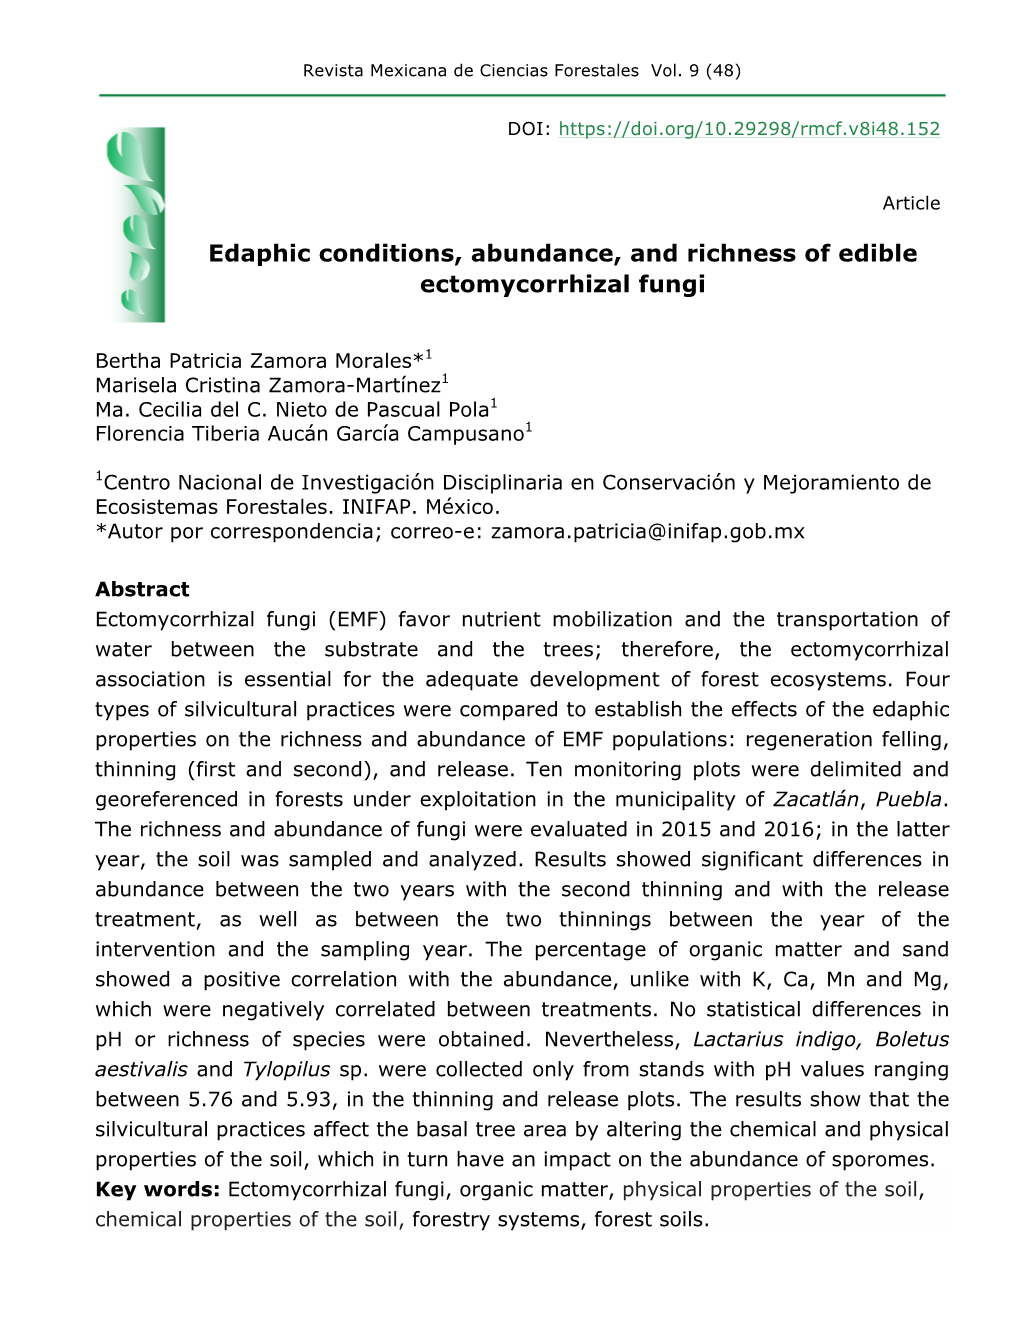 Edaphic Conditions, Abundance, and Richness of Edible Ectomycorrhizal Fungi